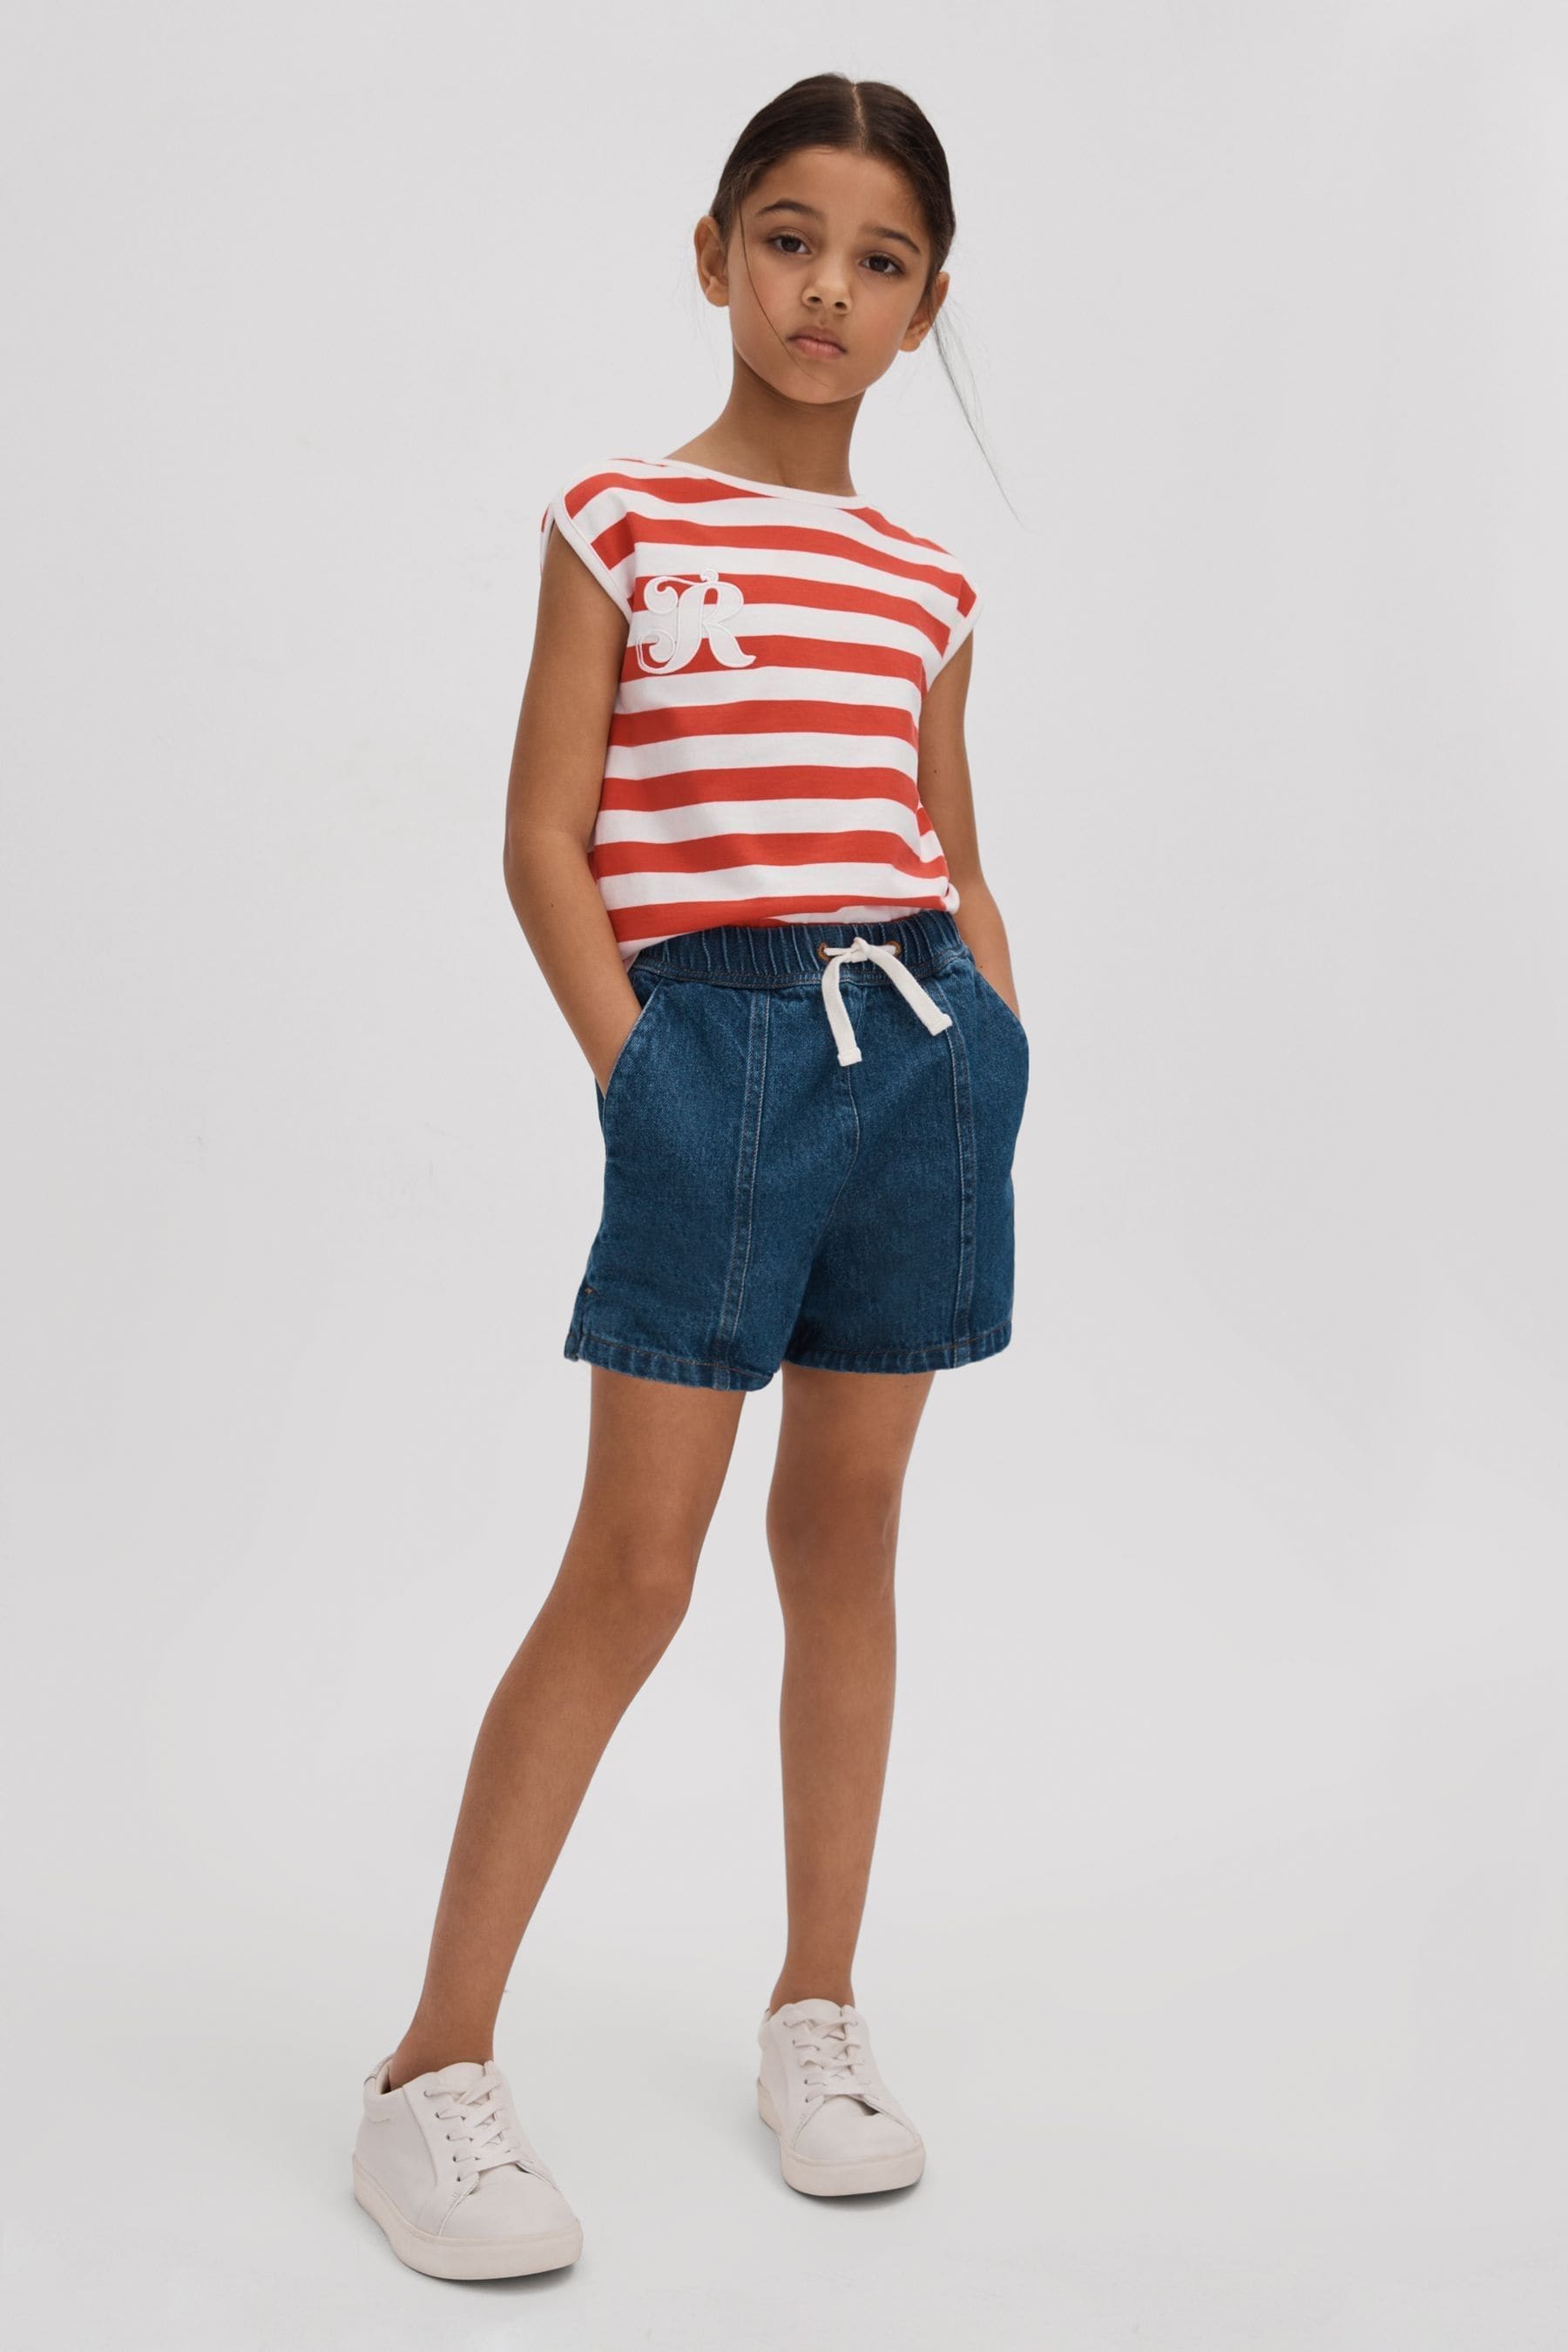 Reiss Kids' Imogen - Red Junior Cotton Striped Sleeveless Vest, Age 6-7 Years